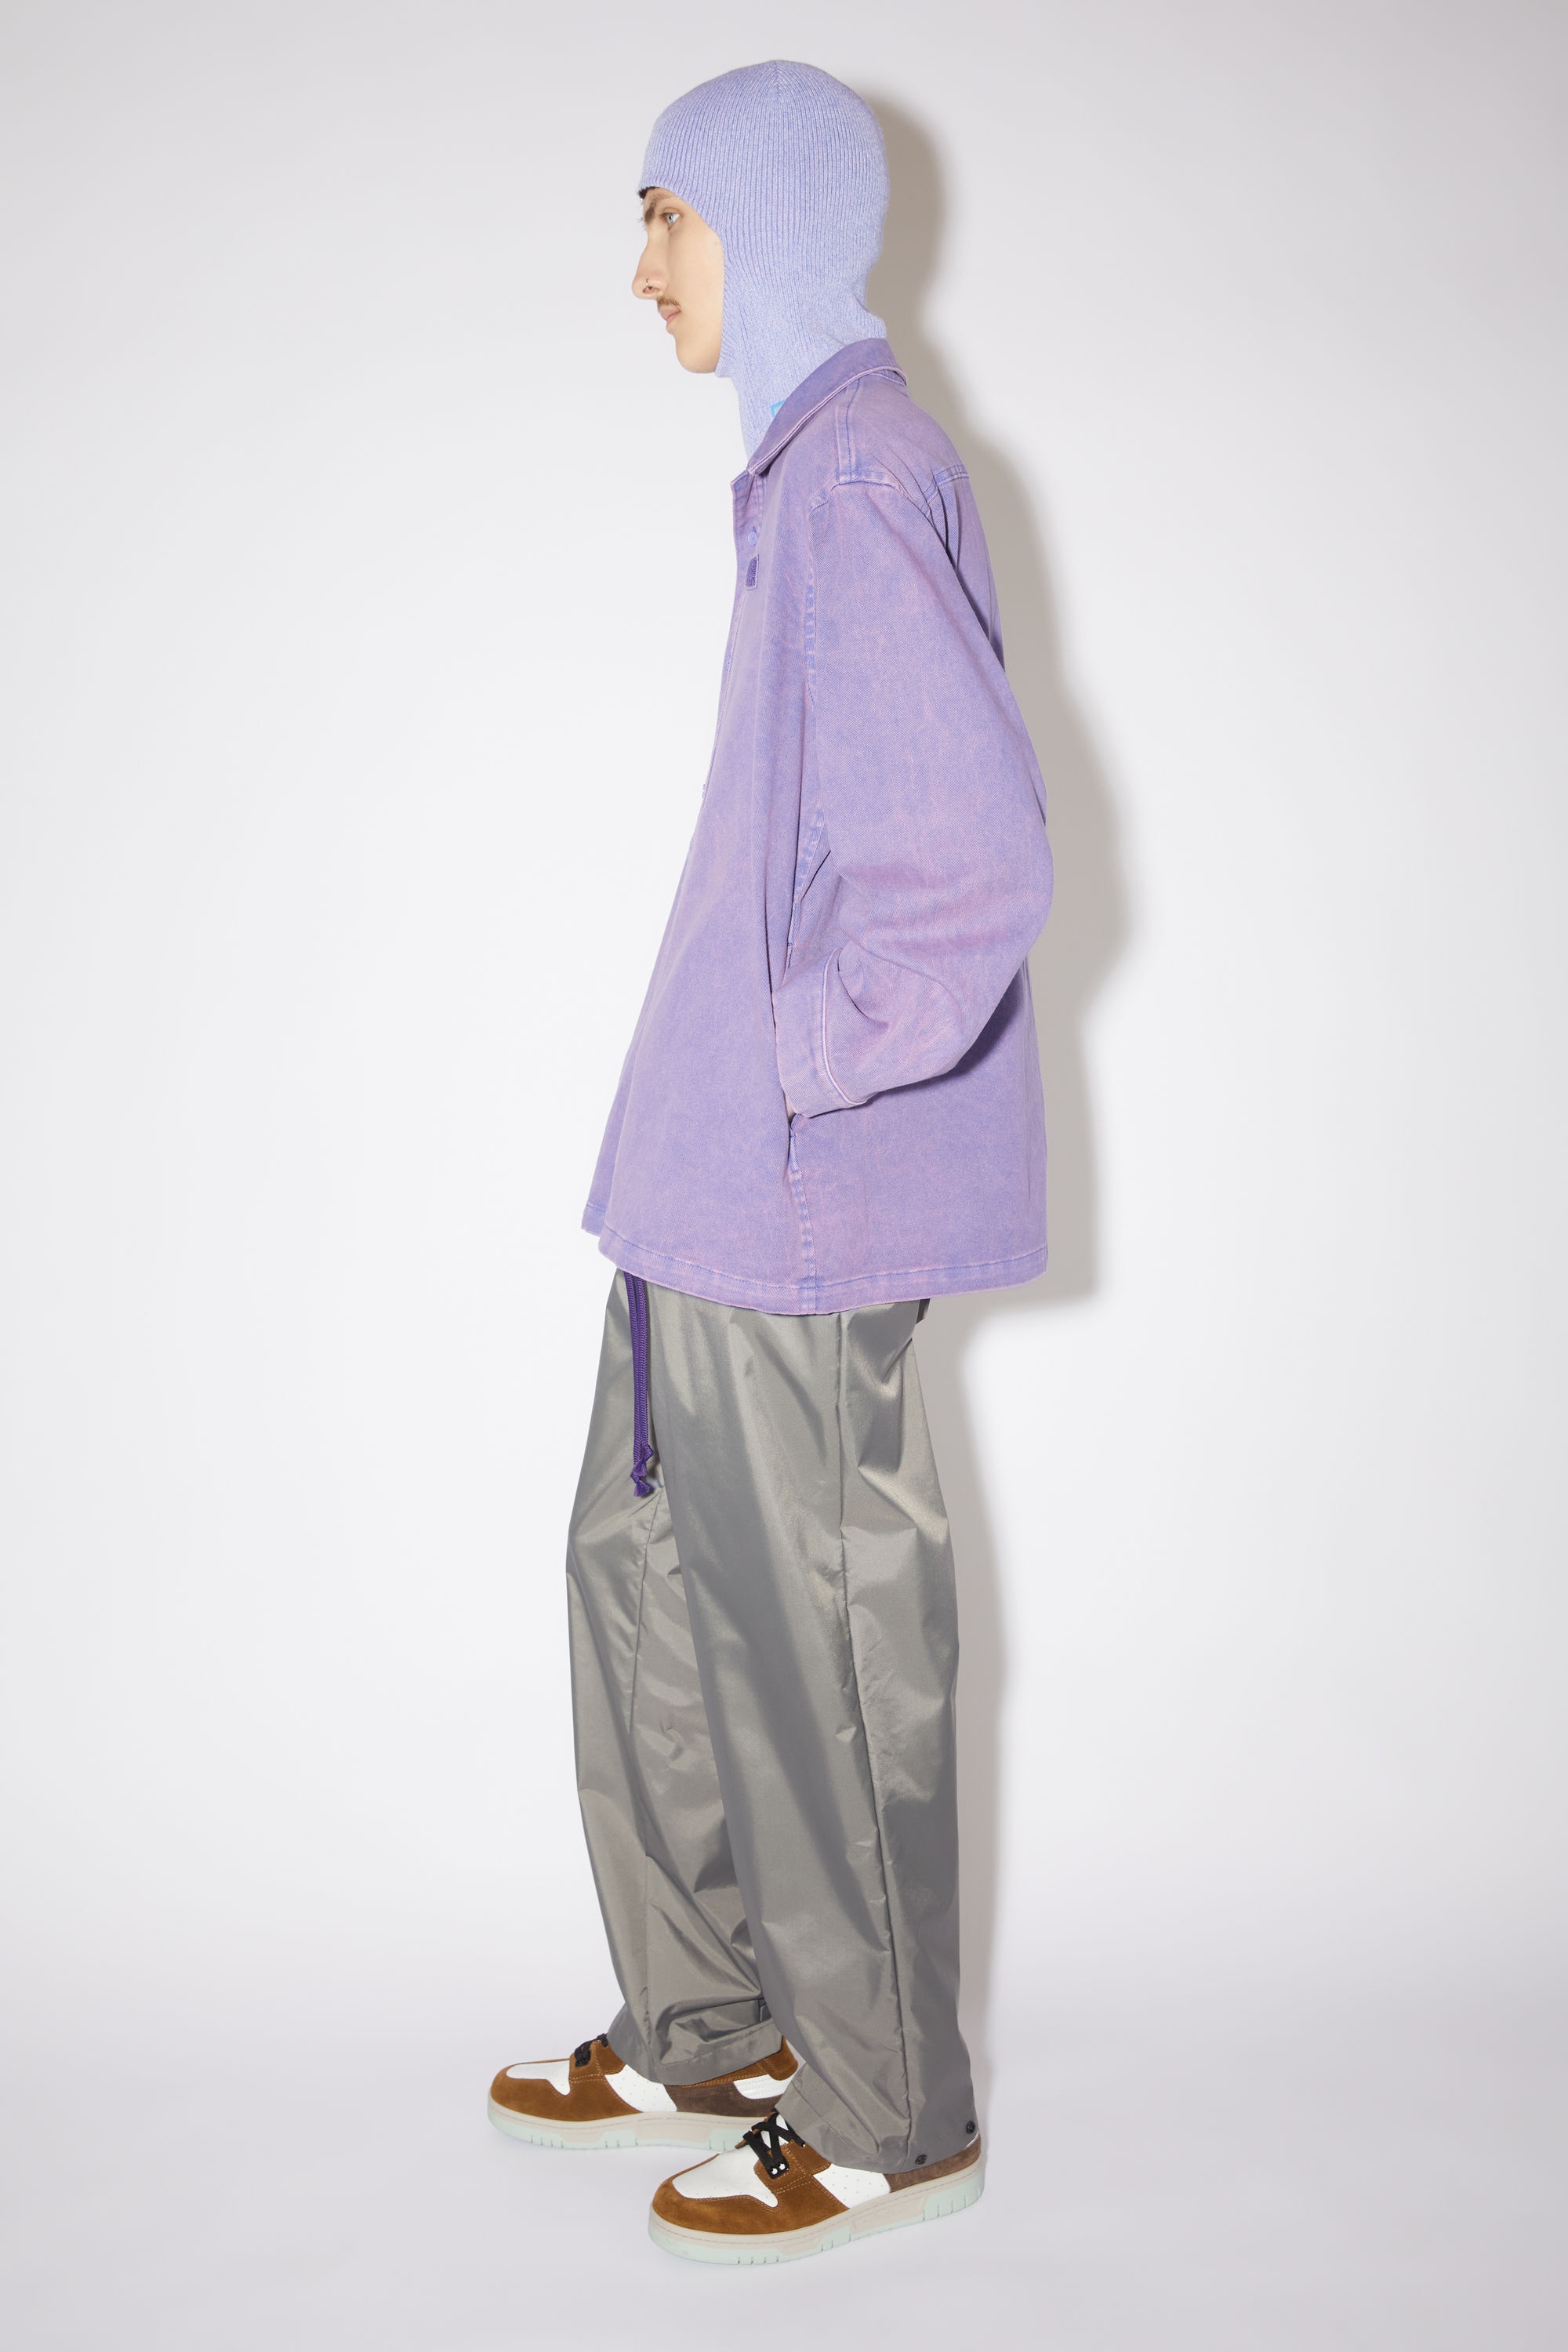 Acne Studios: Purple Heat-Reactive Jacket